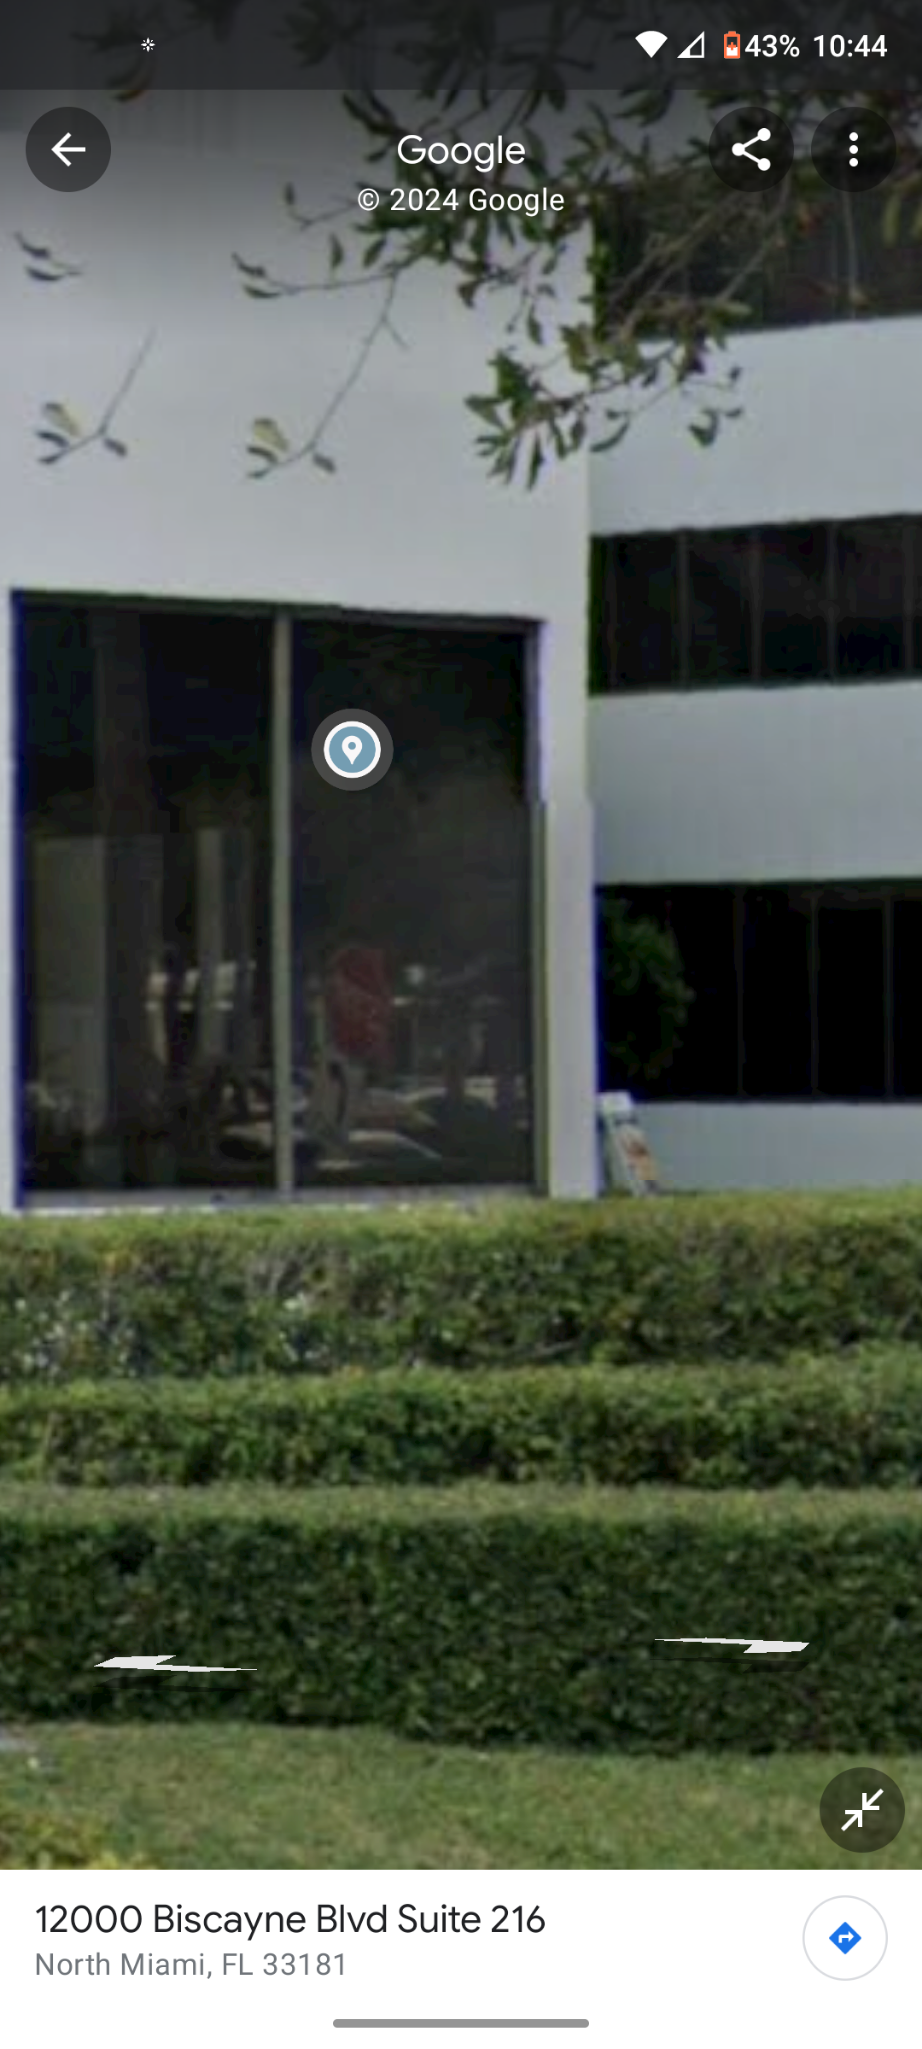 $Innovative Eyewear (LUCY.US)$ 這是你的公司辦公室這是整個公司的範圍，一個 350 平方英尺的套房